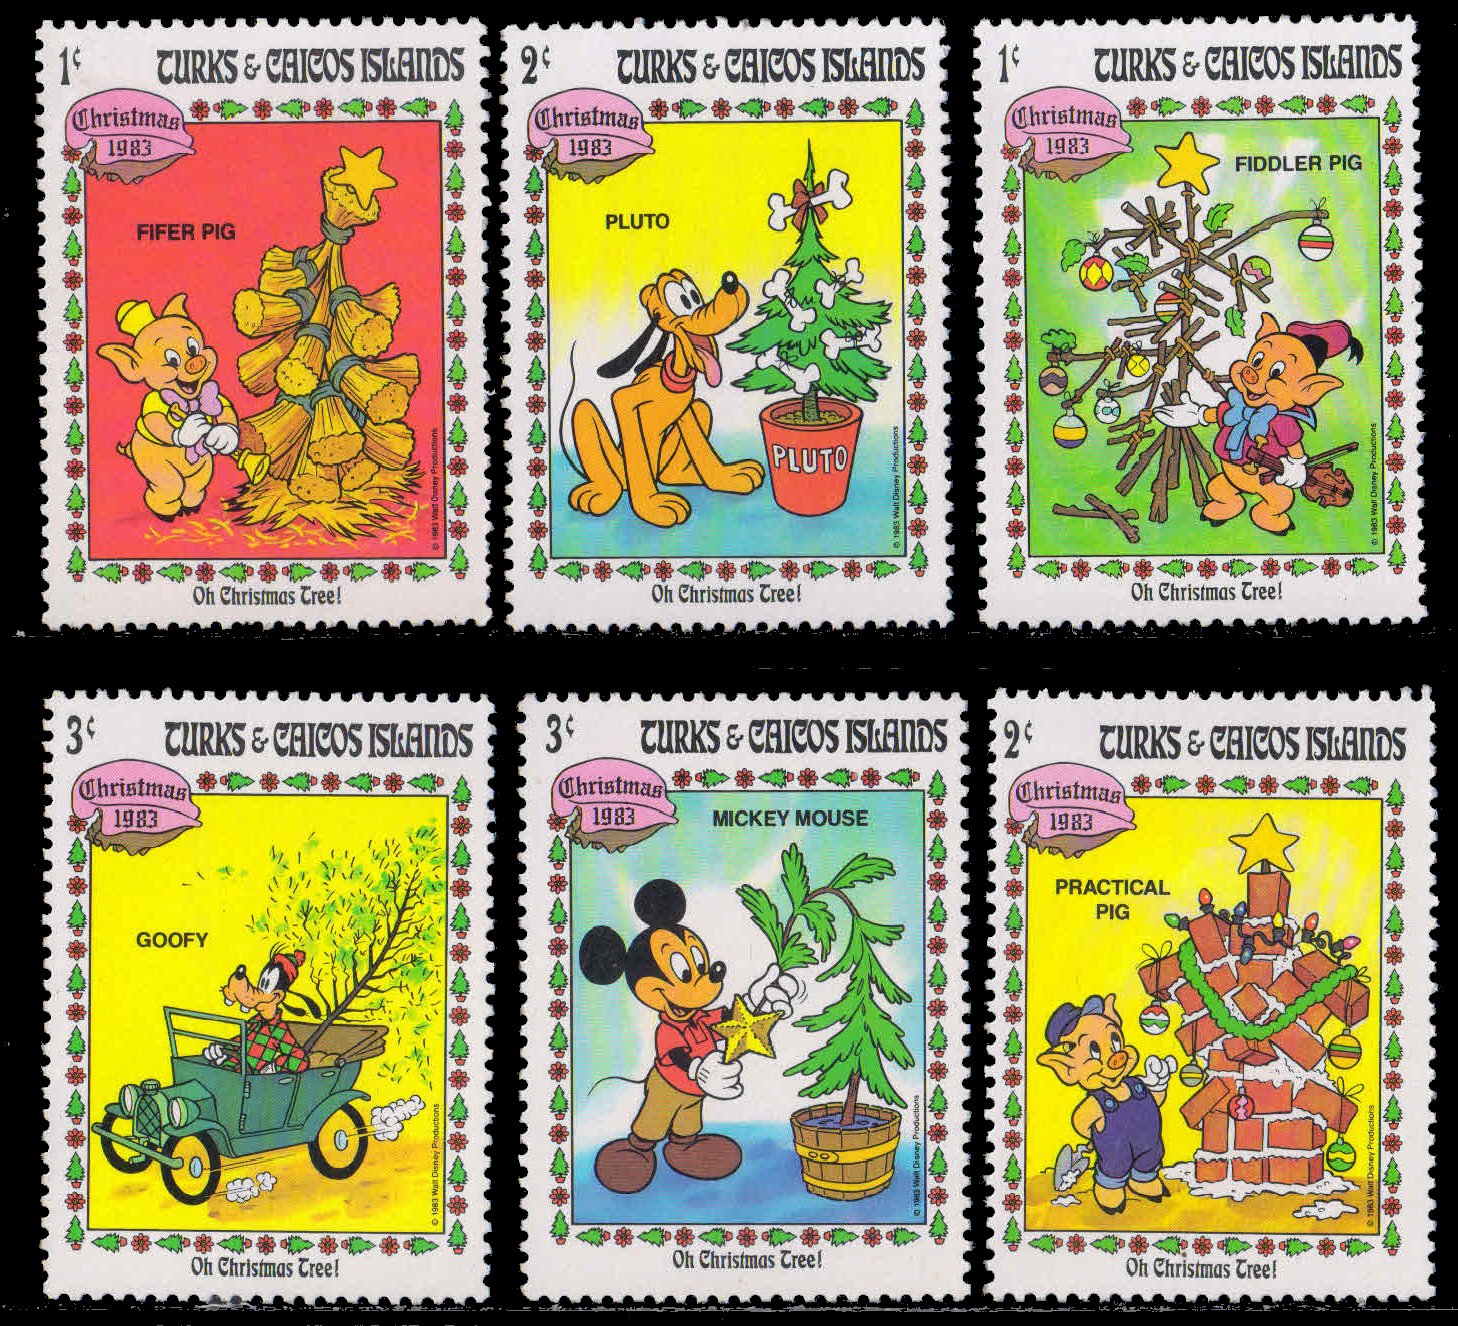 TURKS & CAICOS ISLANDS 1983-Christmas, Set of 6, Walt Disney Cartoon Characters, MNH, Genuine Postage Stamps S.G.  No. 759-764